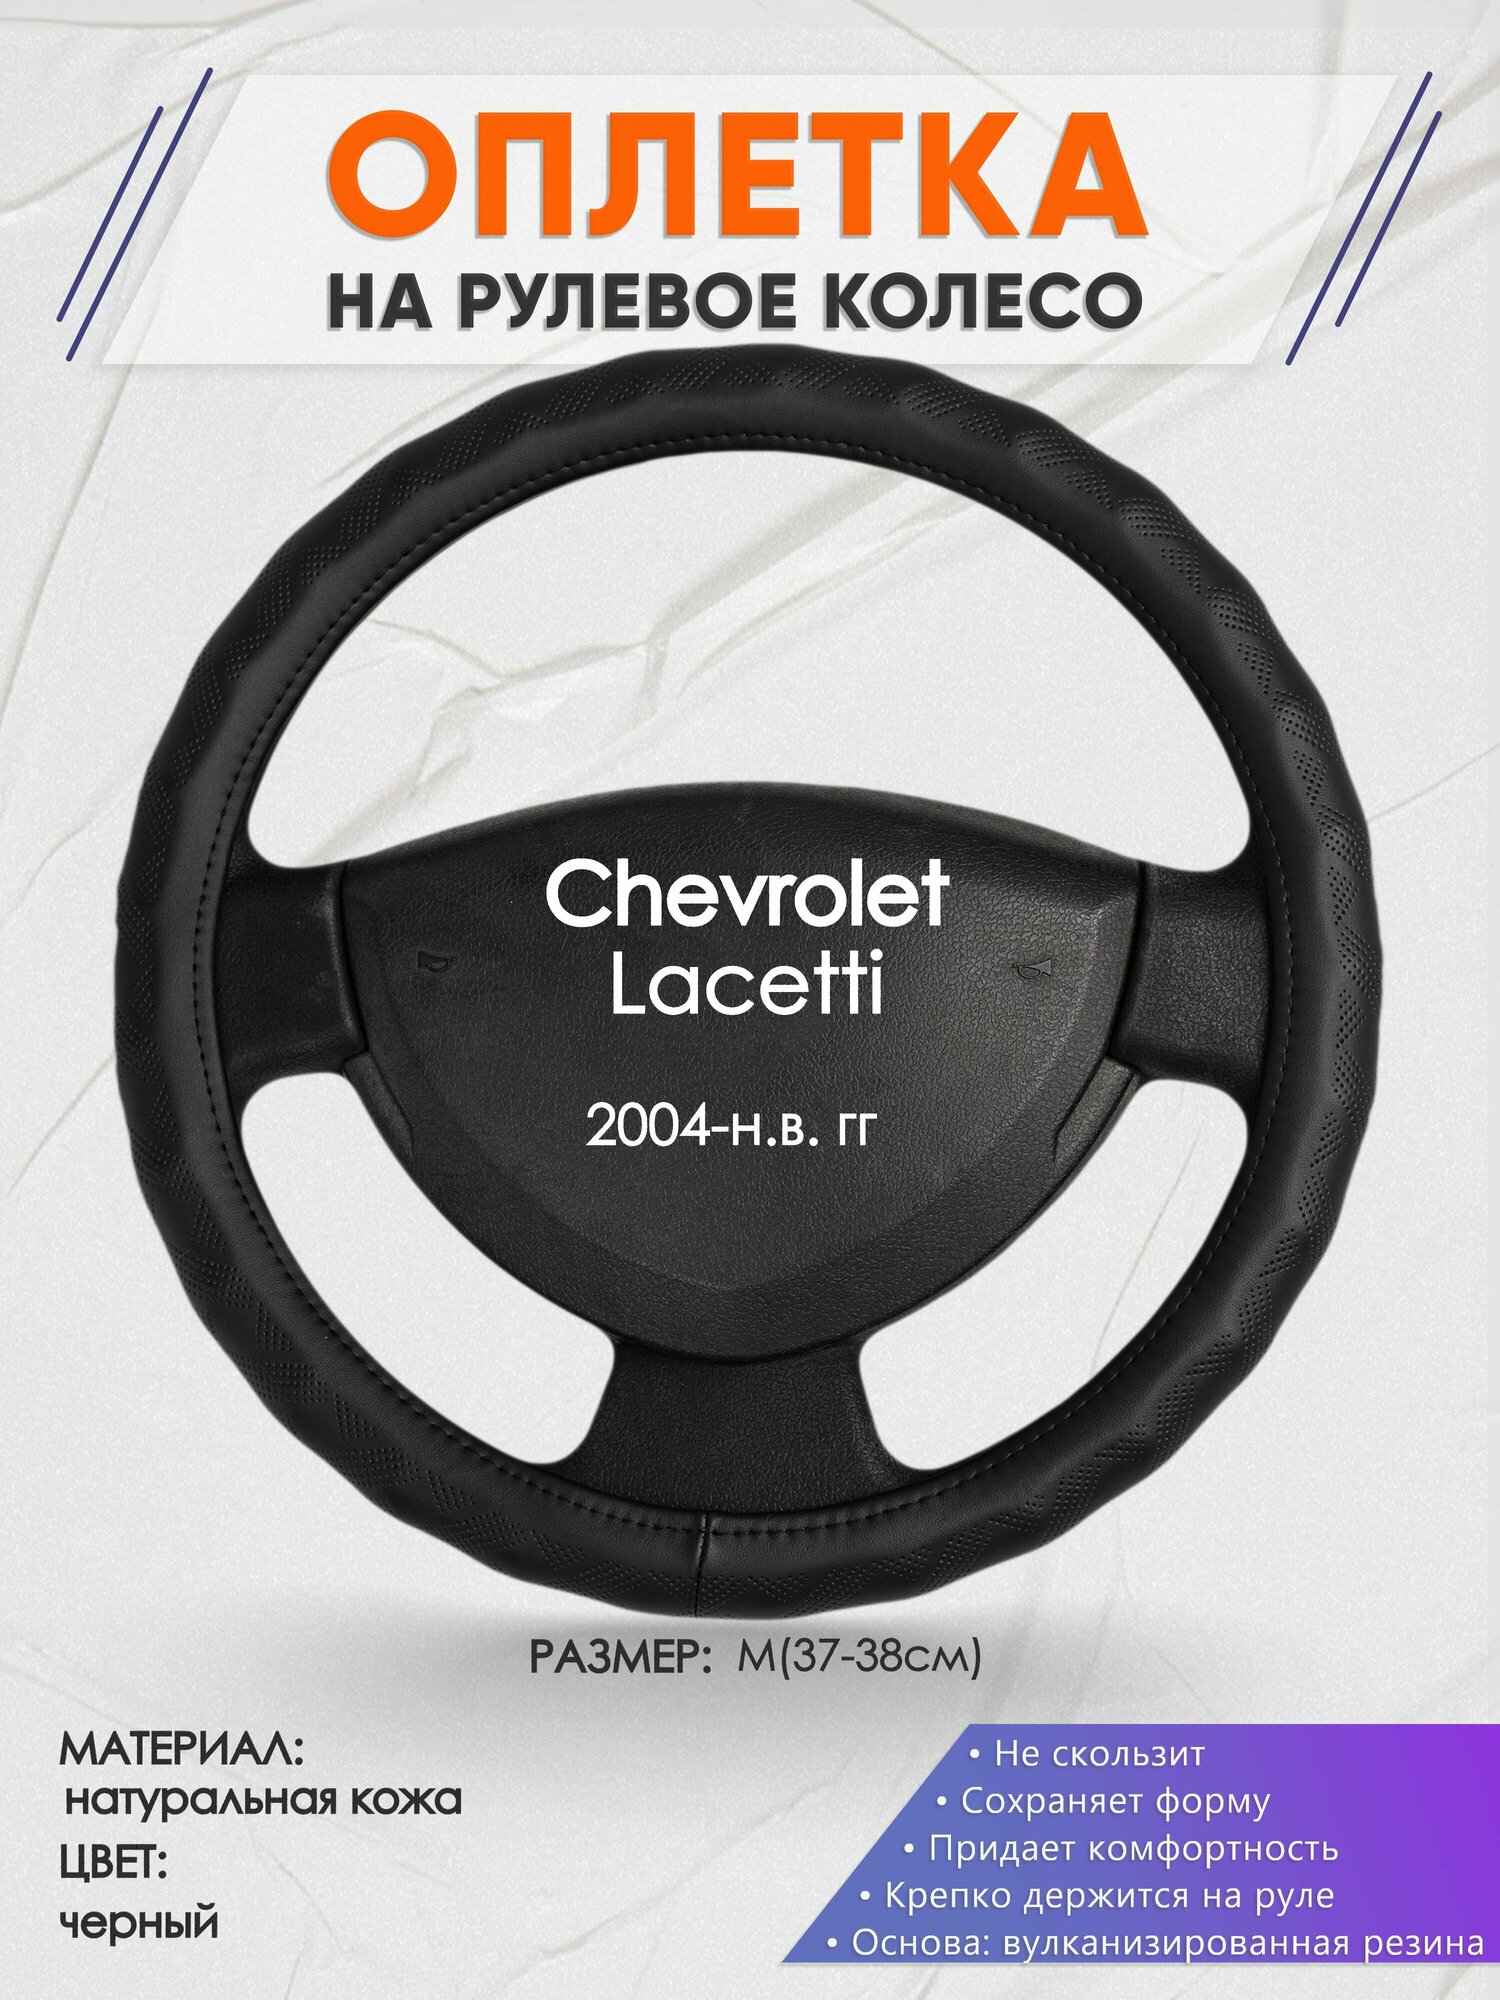 Оплетка на руль для Chevrolet Lacetti (Шевроле Лачети) 2004-н. в, M(37-38см), Натуральная кожа 26